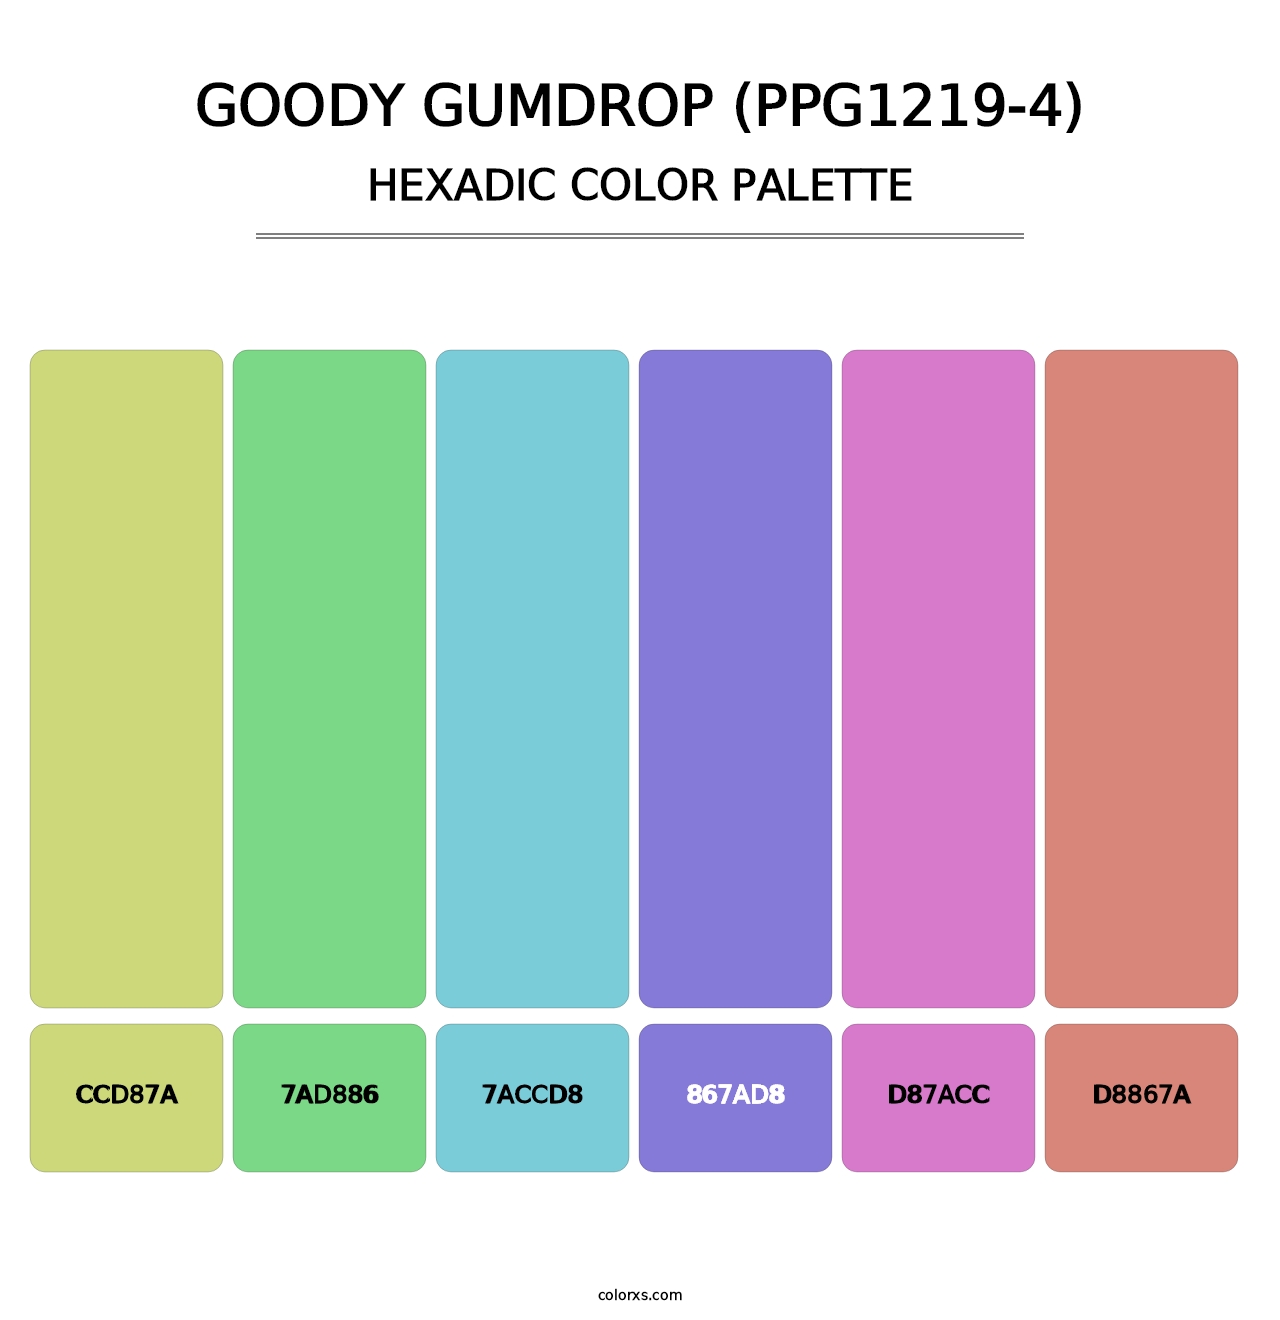 Goody Gumdrop (PPG1219-4) - Hexadic Color Palette